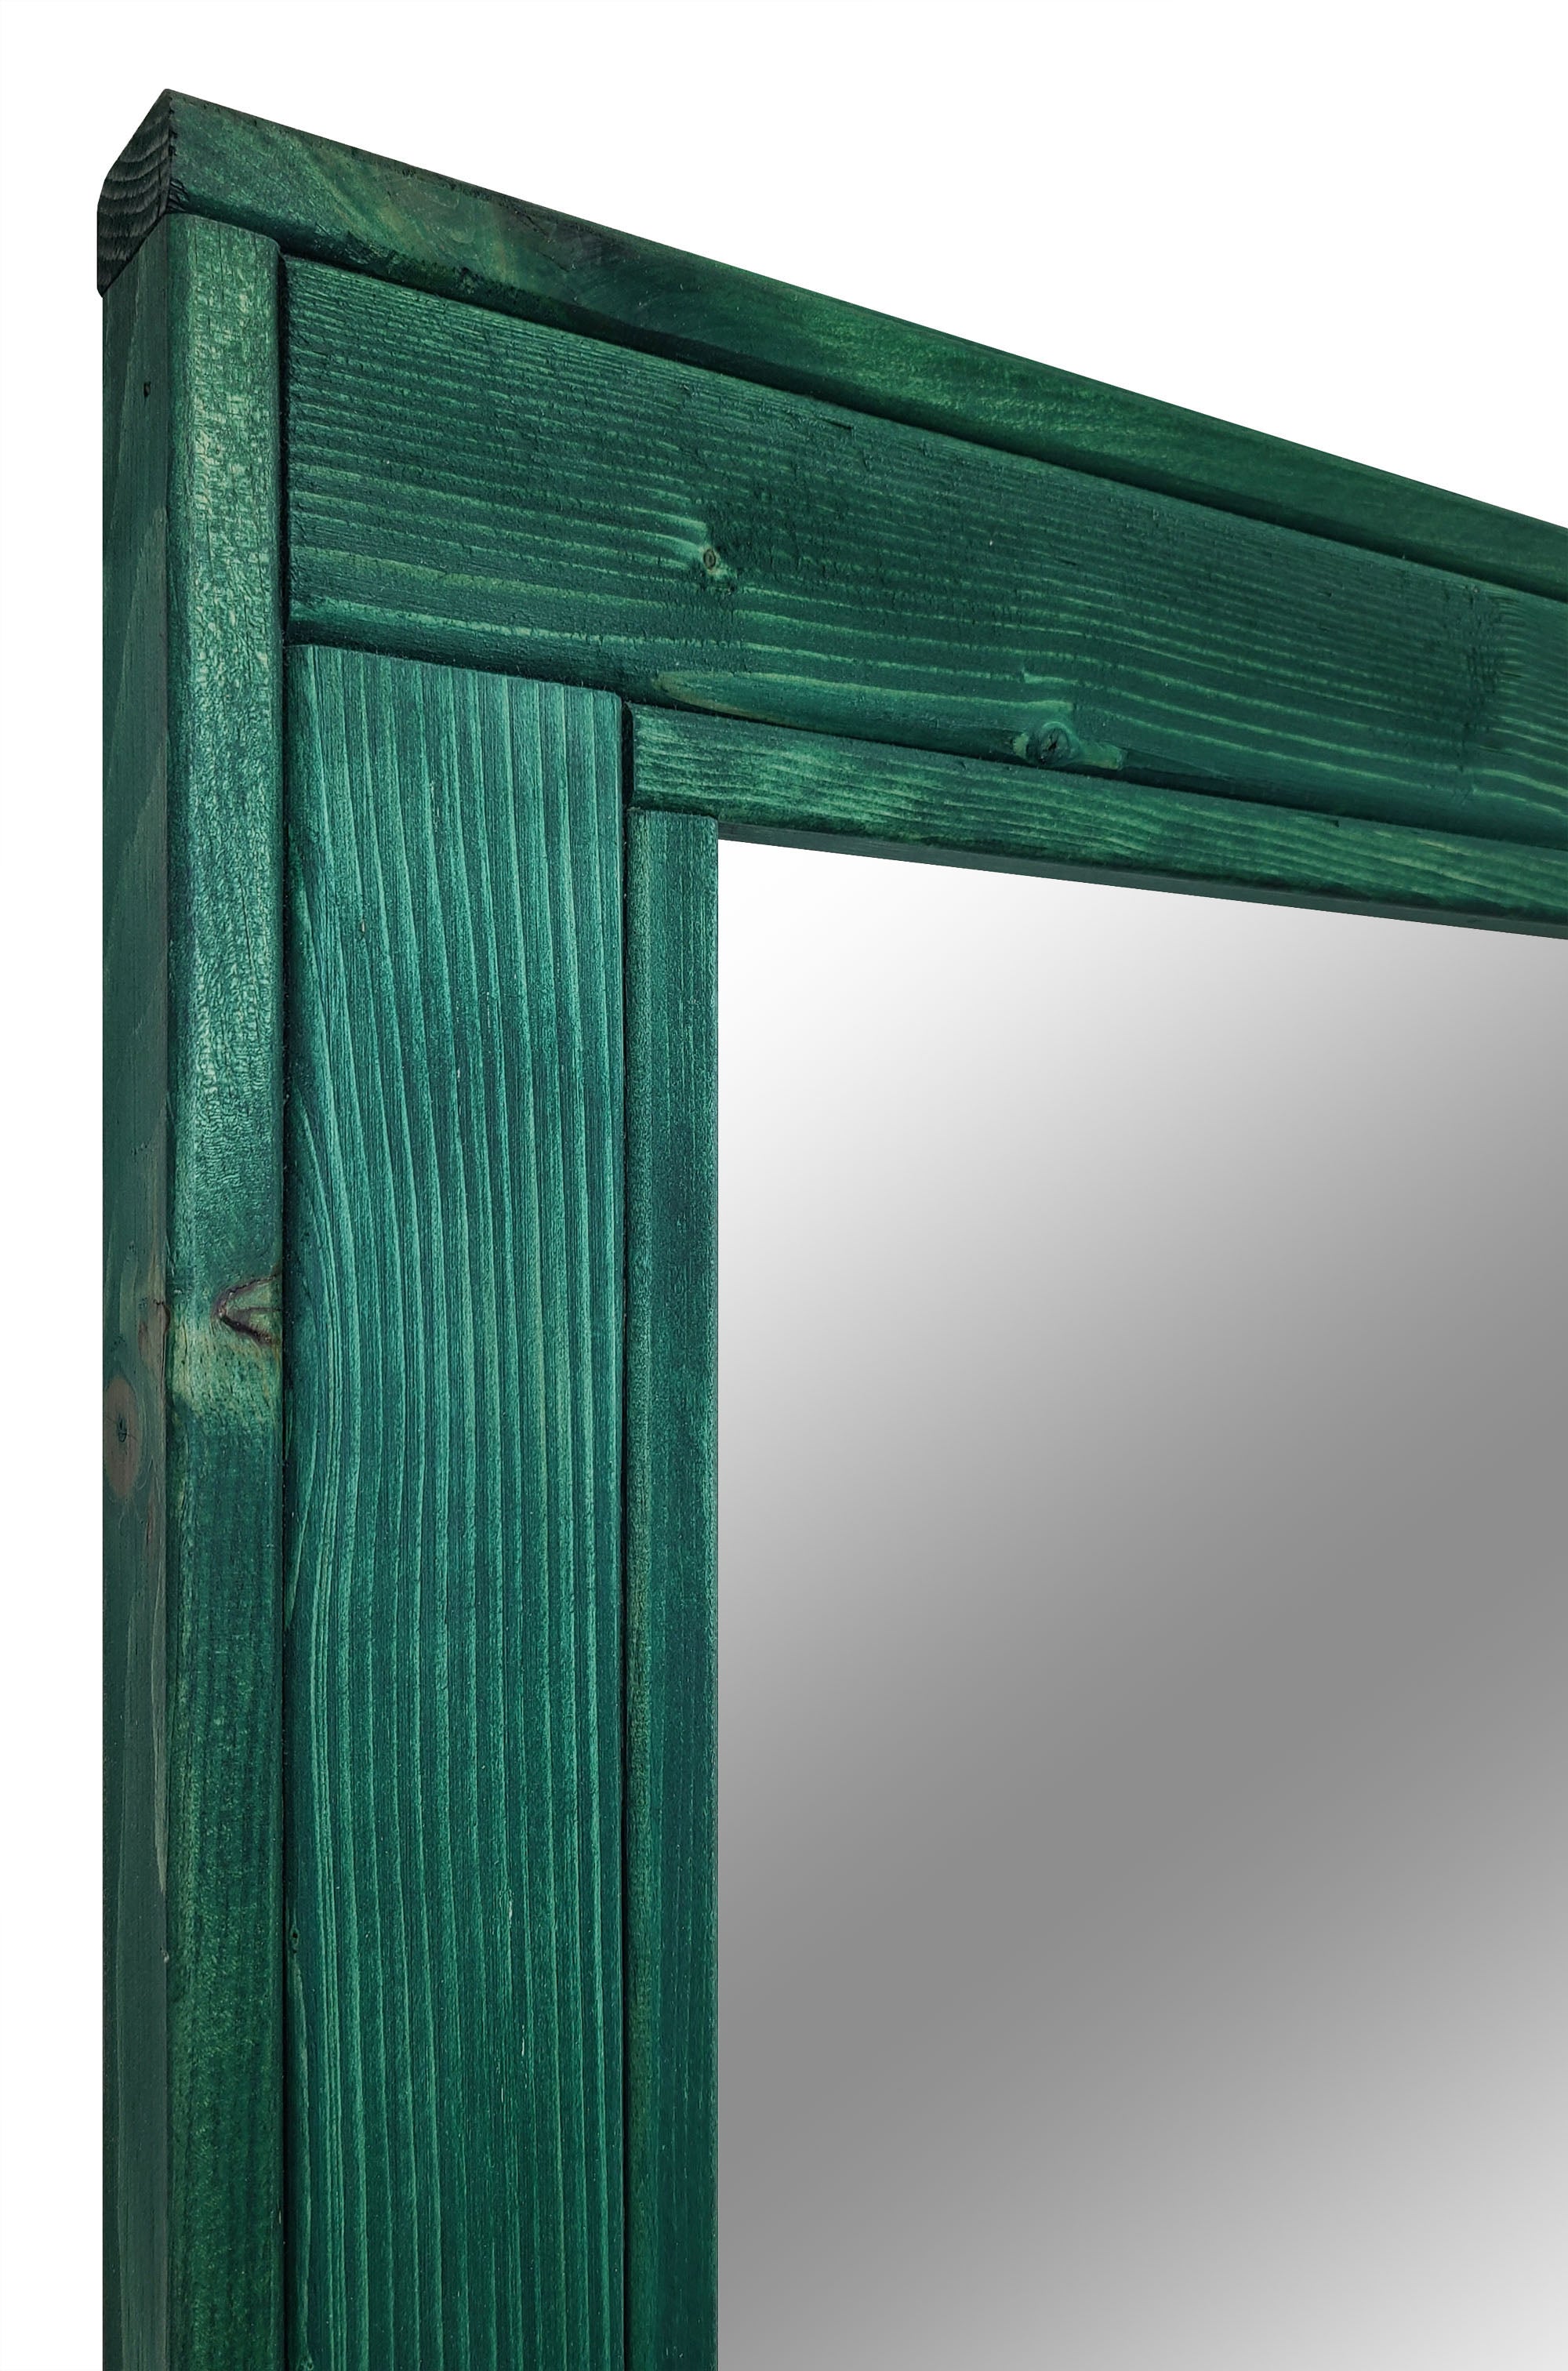 Herringbone Rustic Reclaimed Wood Wall Mirror, 5 Sizes & 13 Colors, Shown in Hunter Green